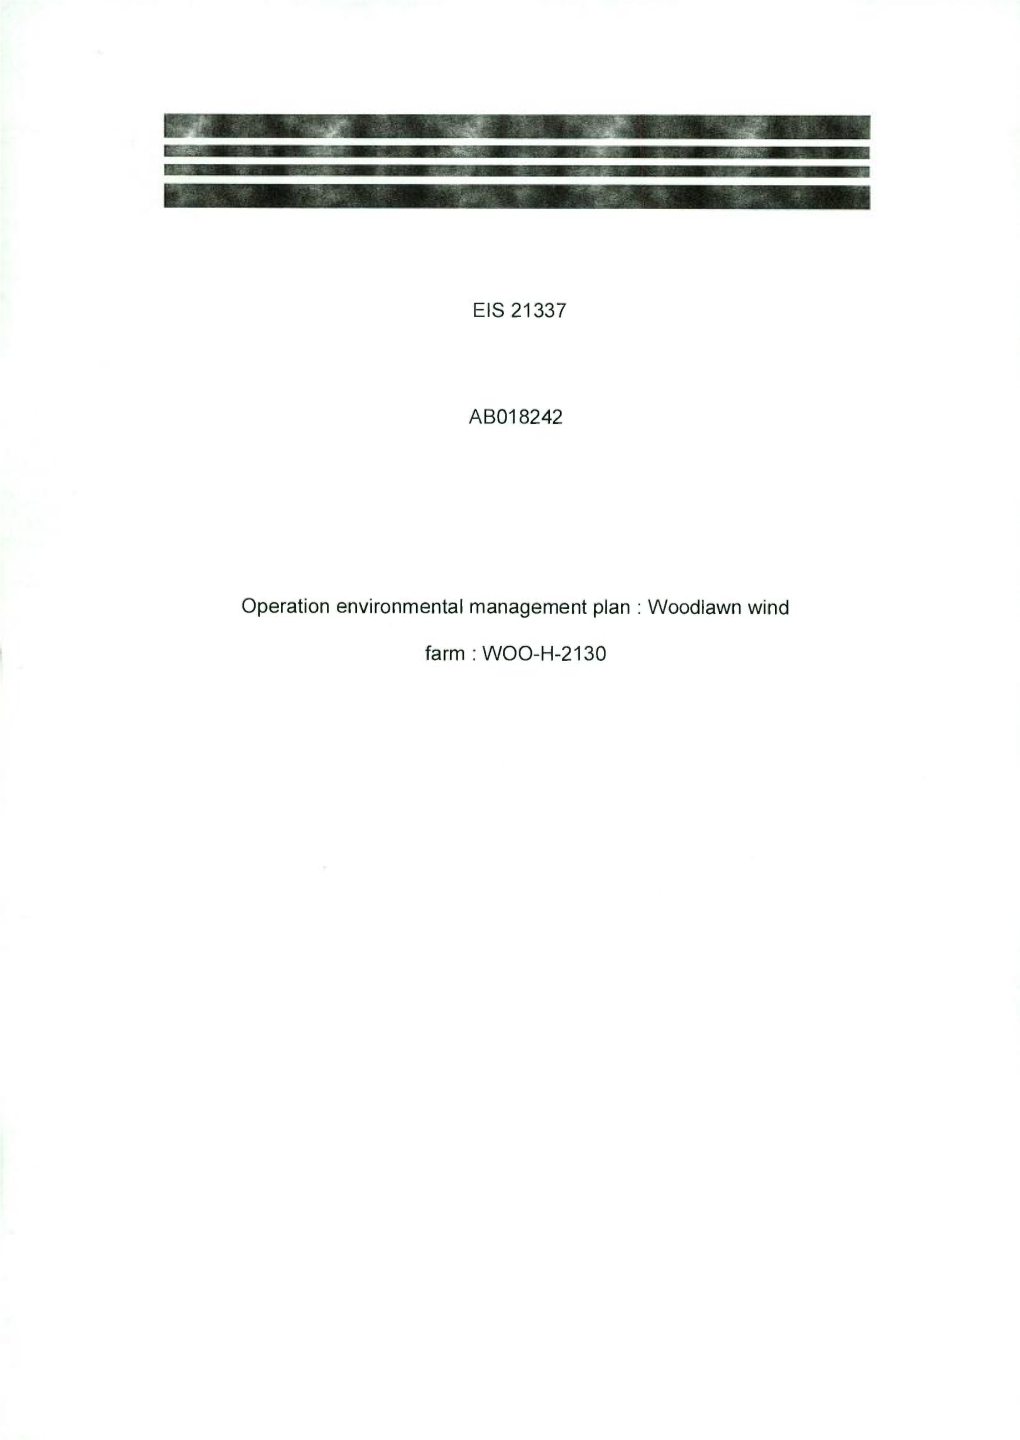 EIS 21337 ABOI 8242 Operation Environmental Management Plan